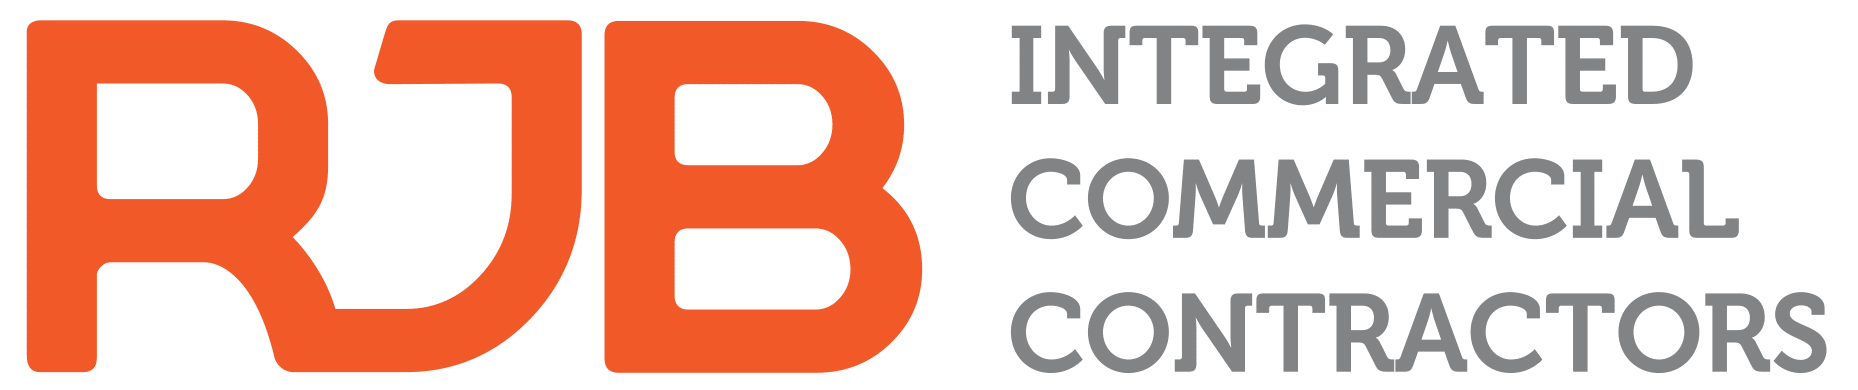 RJB Integrated Commercial Contractors